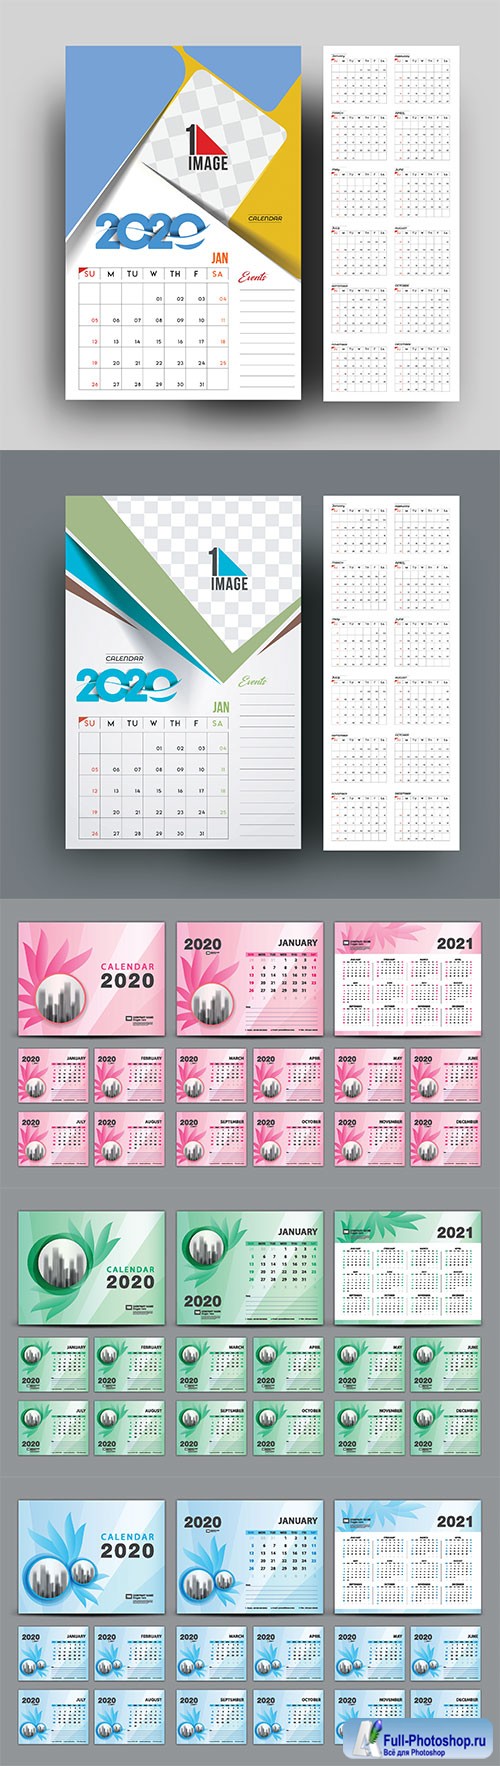 Desk Calendar 2020 template vector, cover design, Set of 12 Months